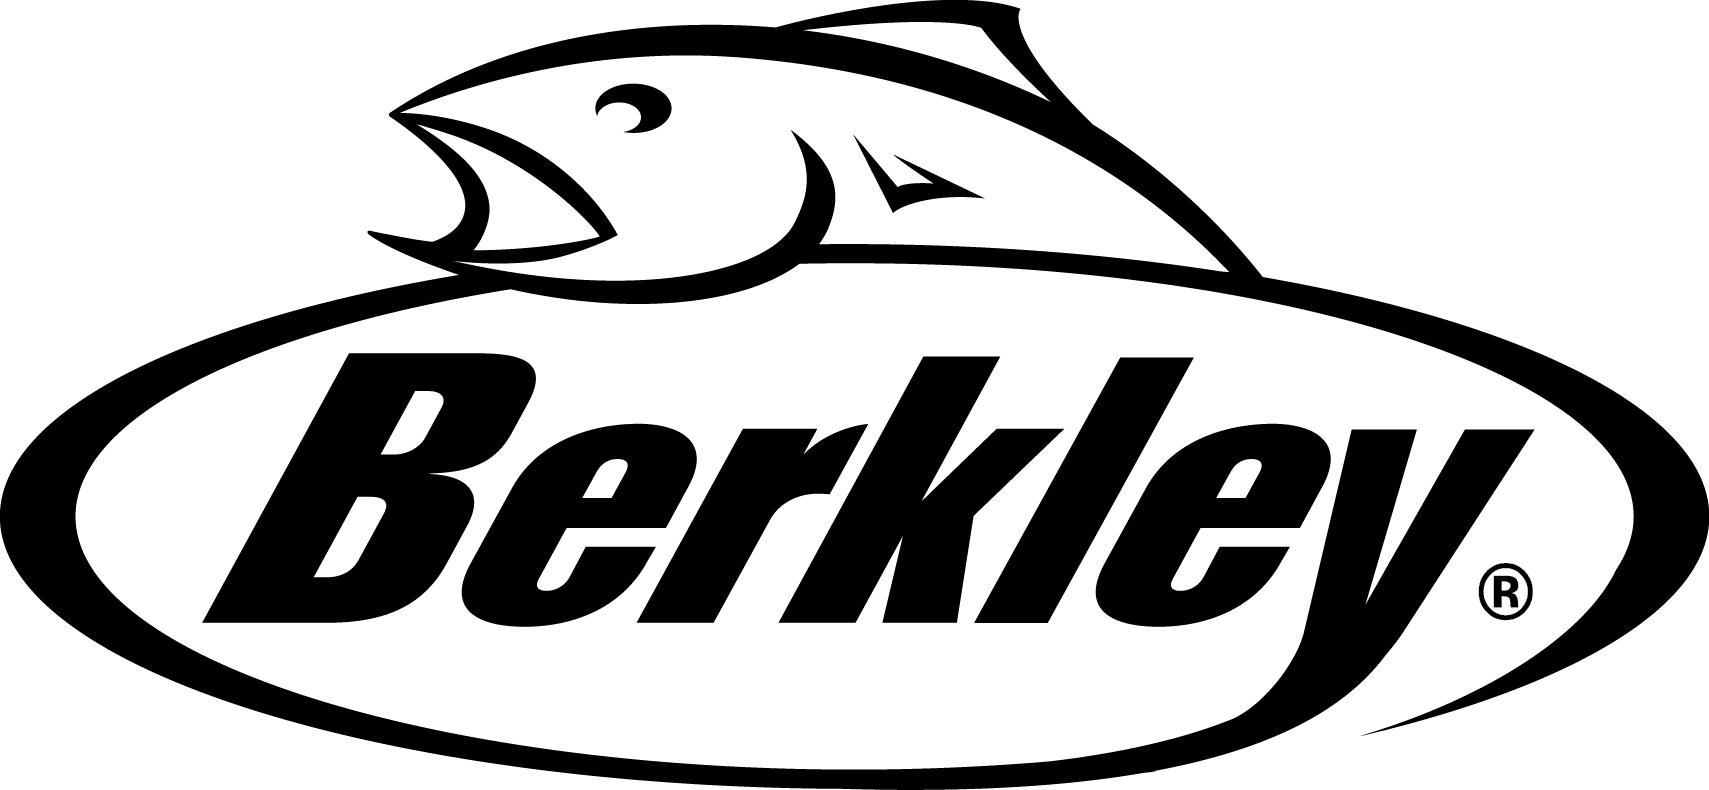 Berkley Discoung Fishing Lures